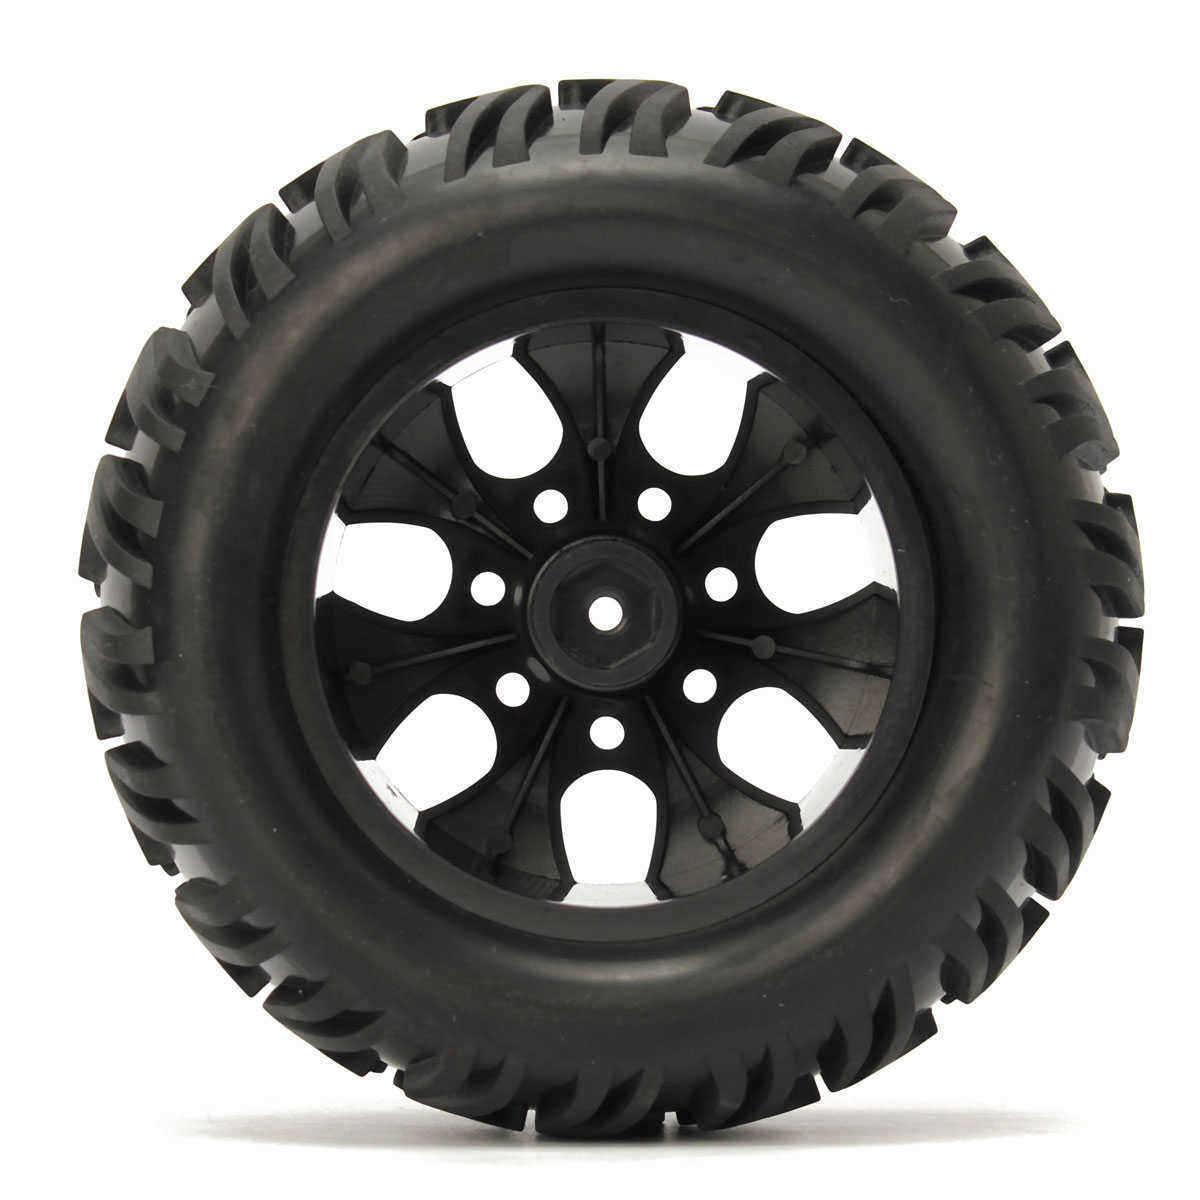 4PCS-Wheel-Rim-amp-Tires-HSP-110-Monster-Truck-RC-Car-12mm-Hub-88005-1072827